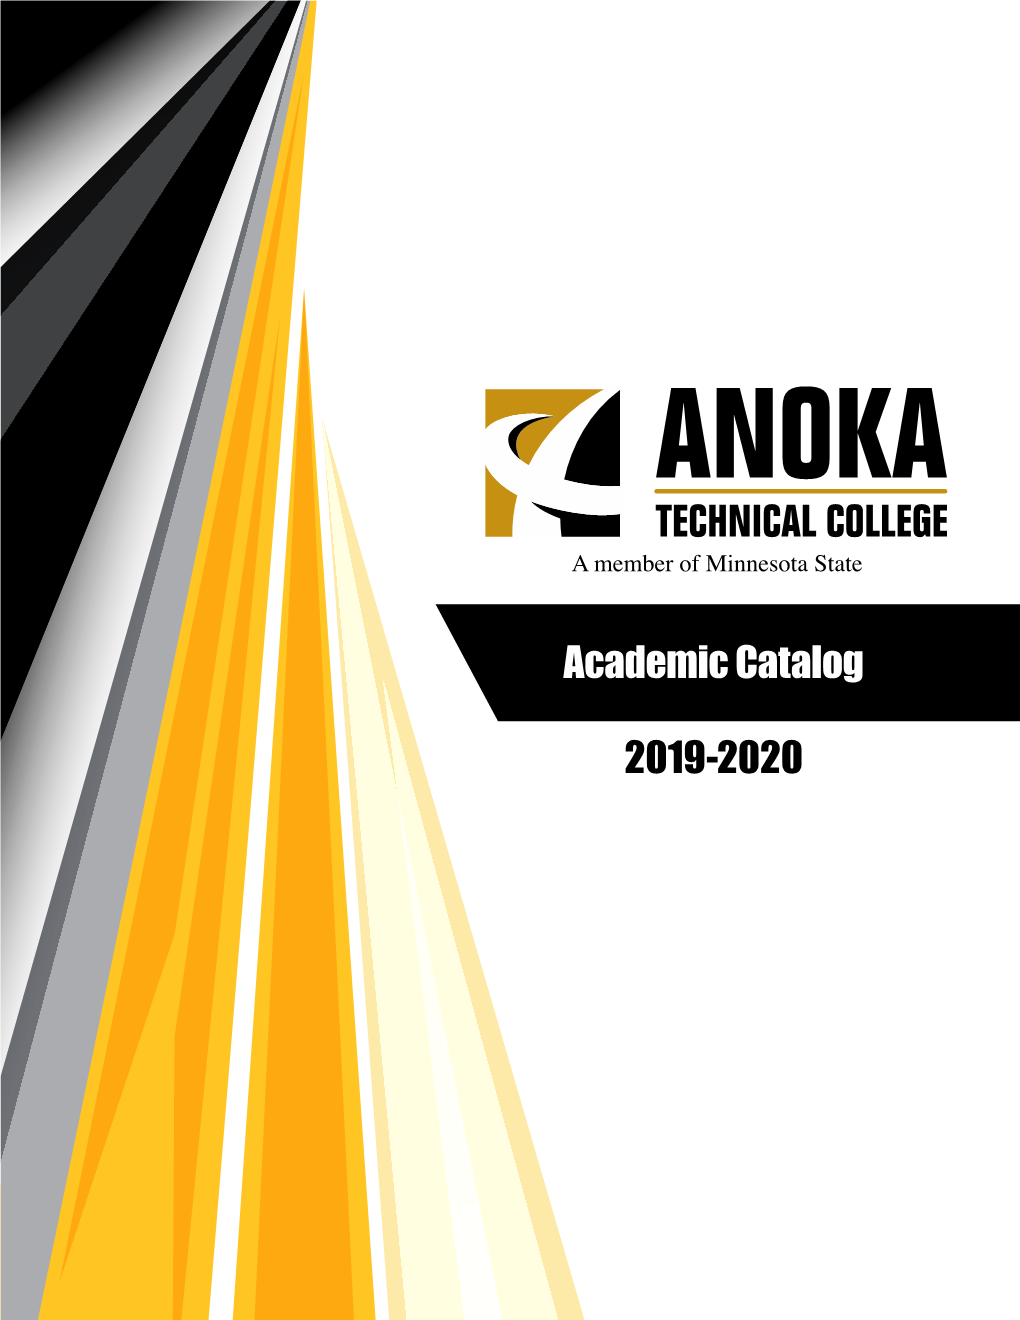 Academic Catalog 2019-2020